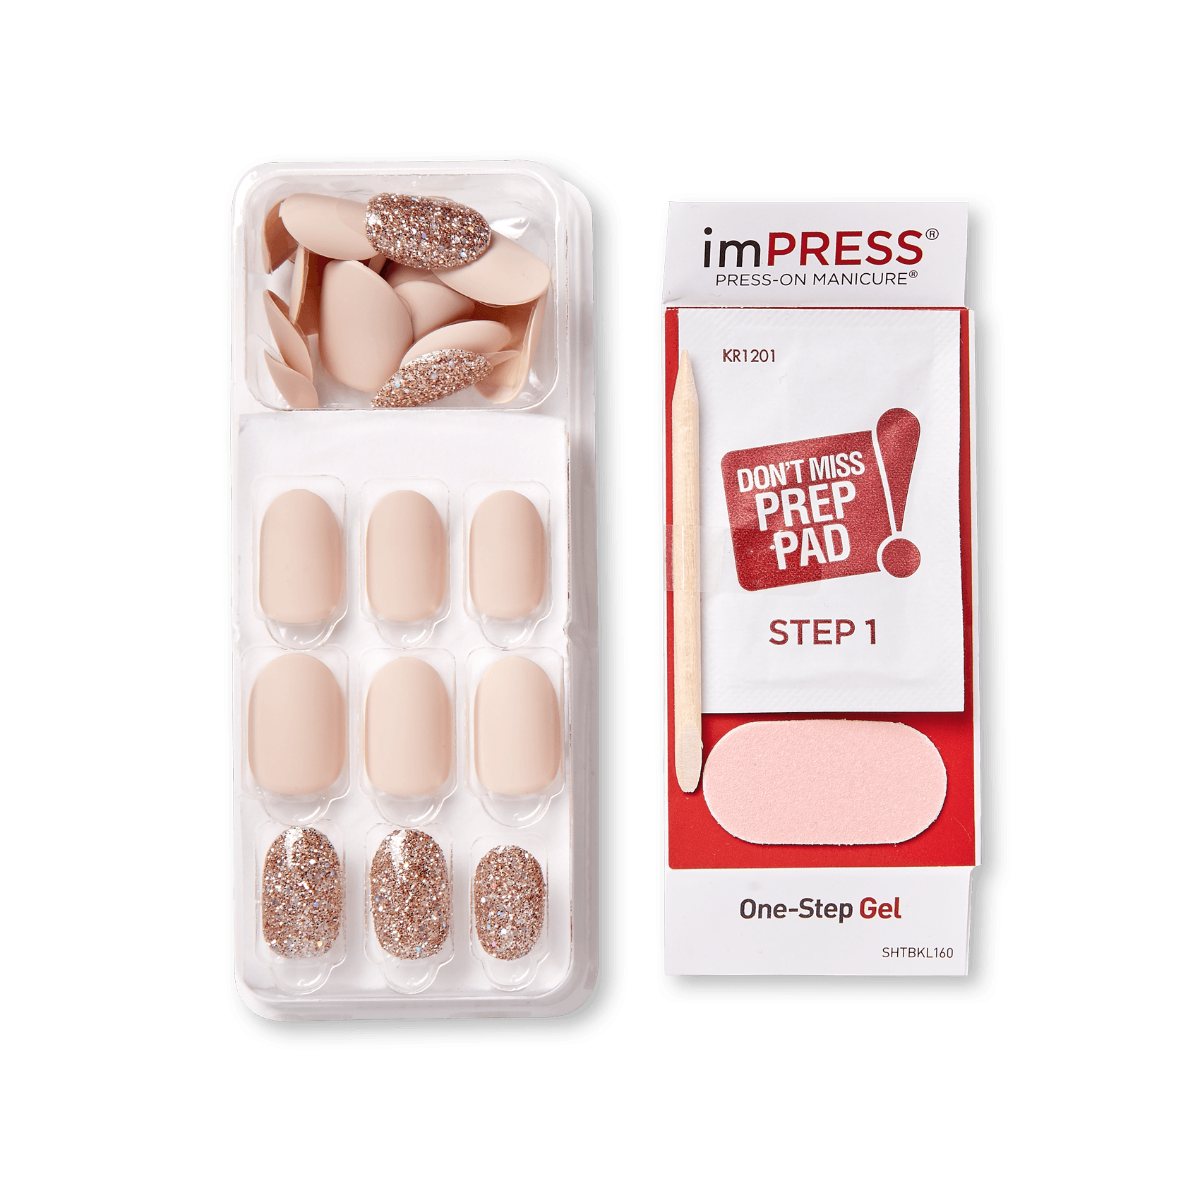 KISS ImPRESS Press-On Manicure - KIM003C Evanesce - Taille S